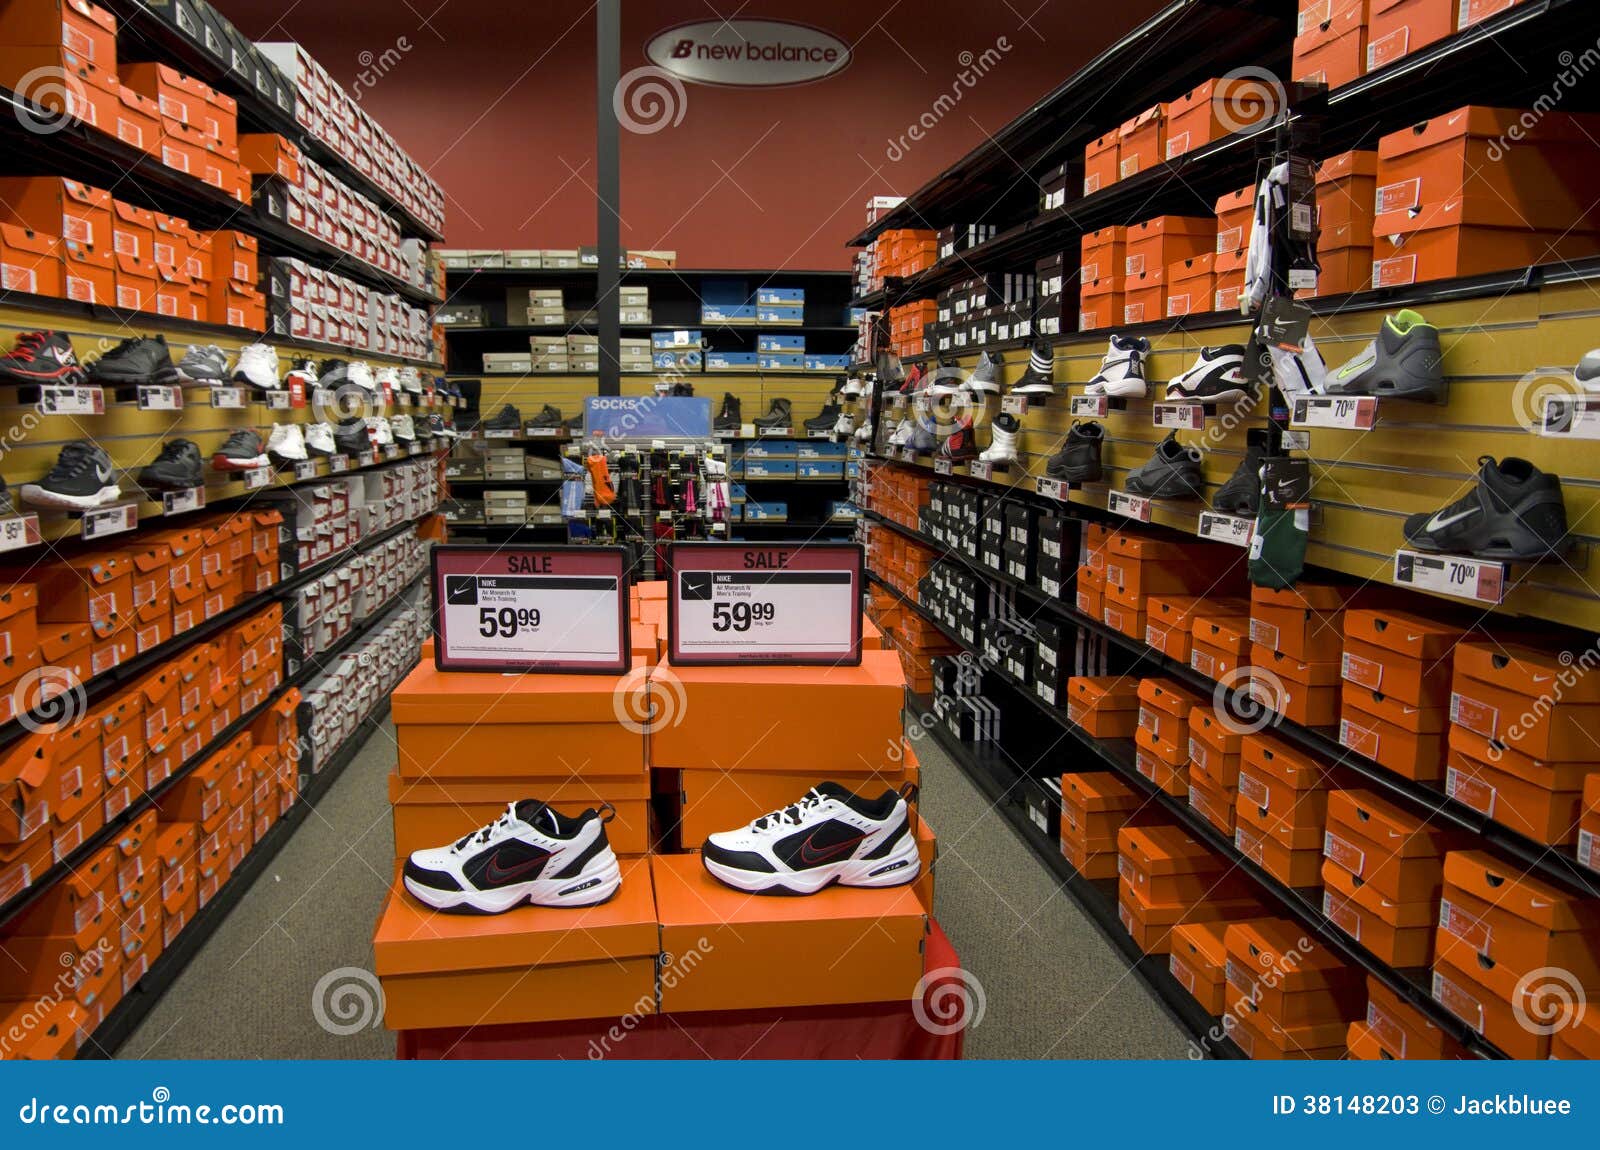 sport shoe stores